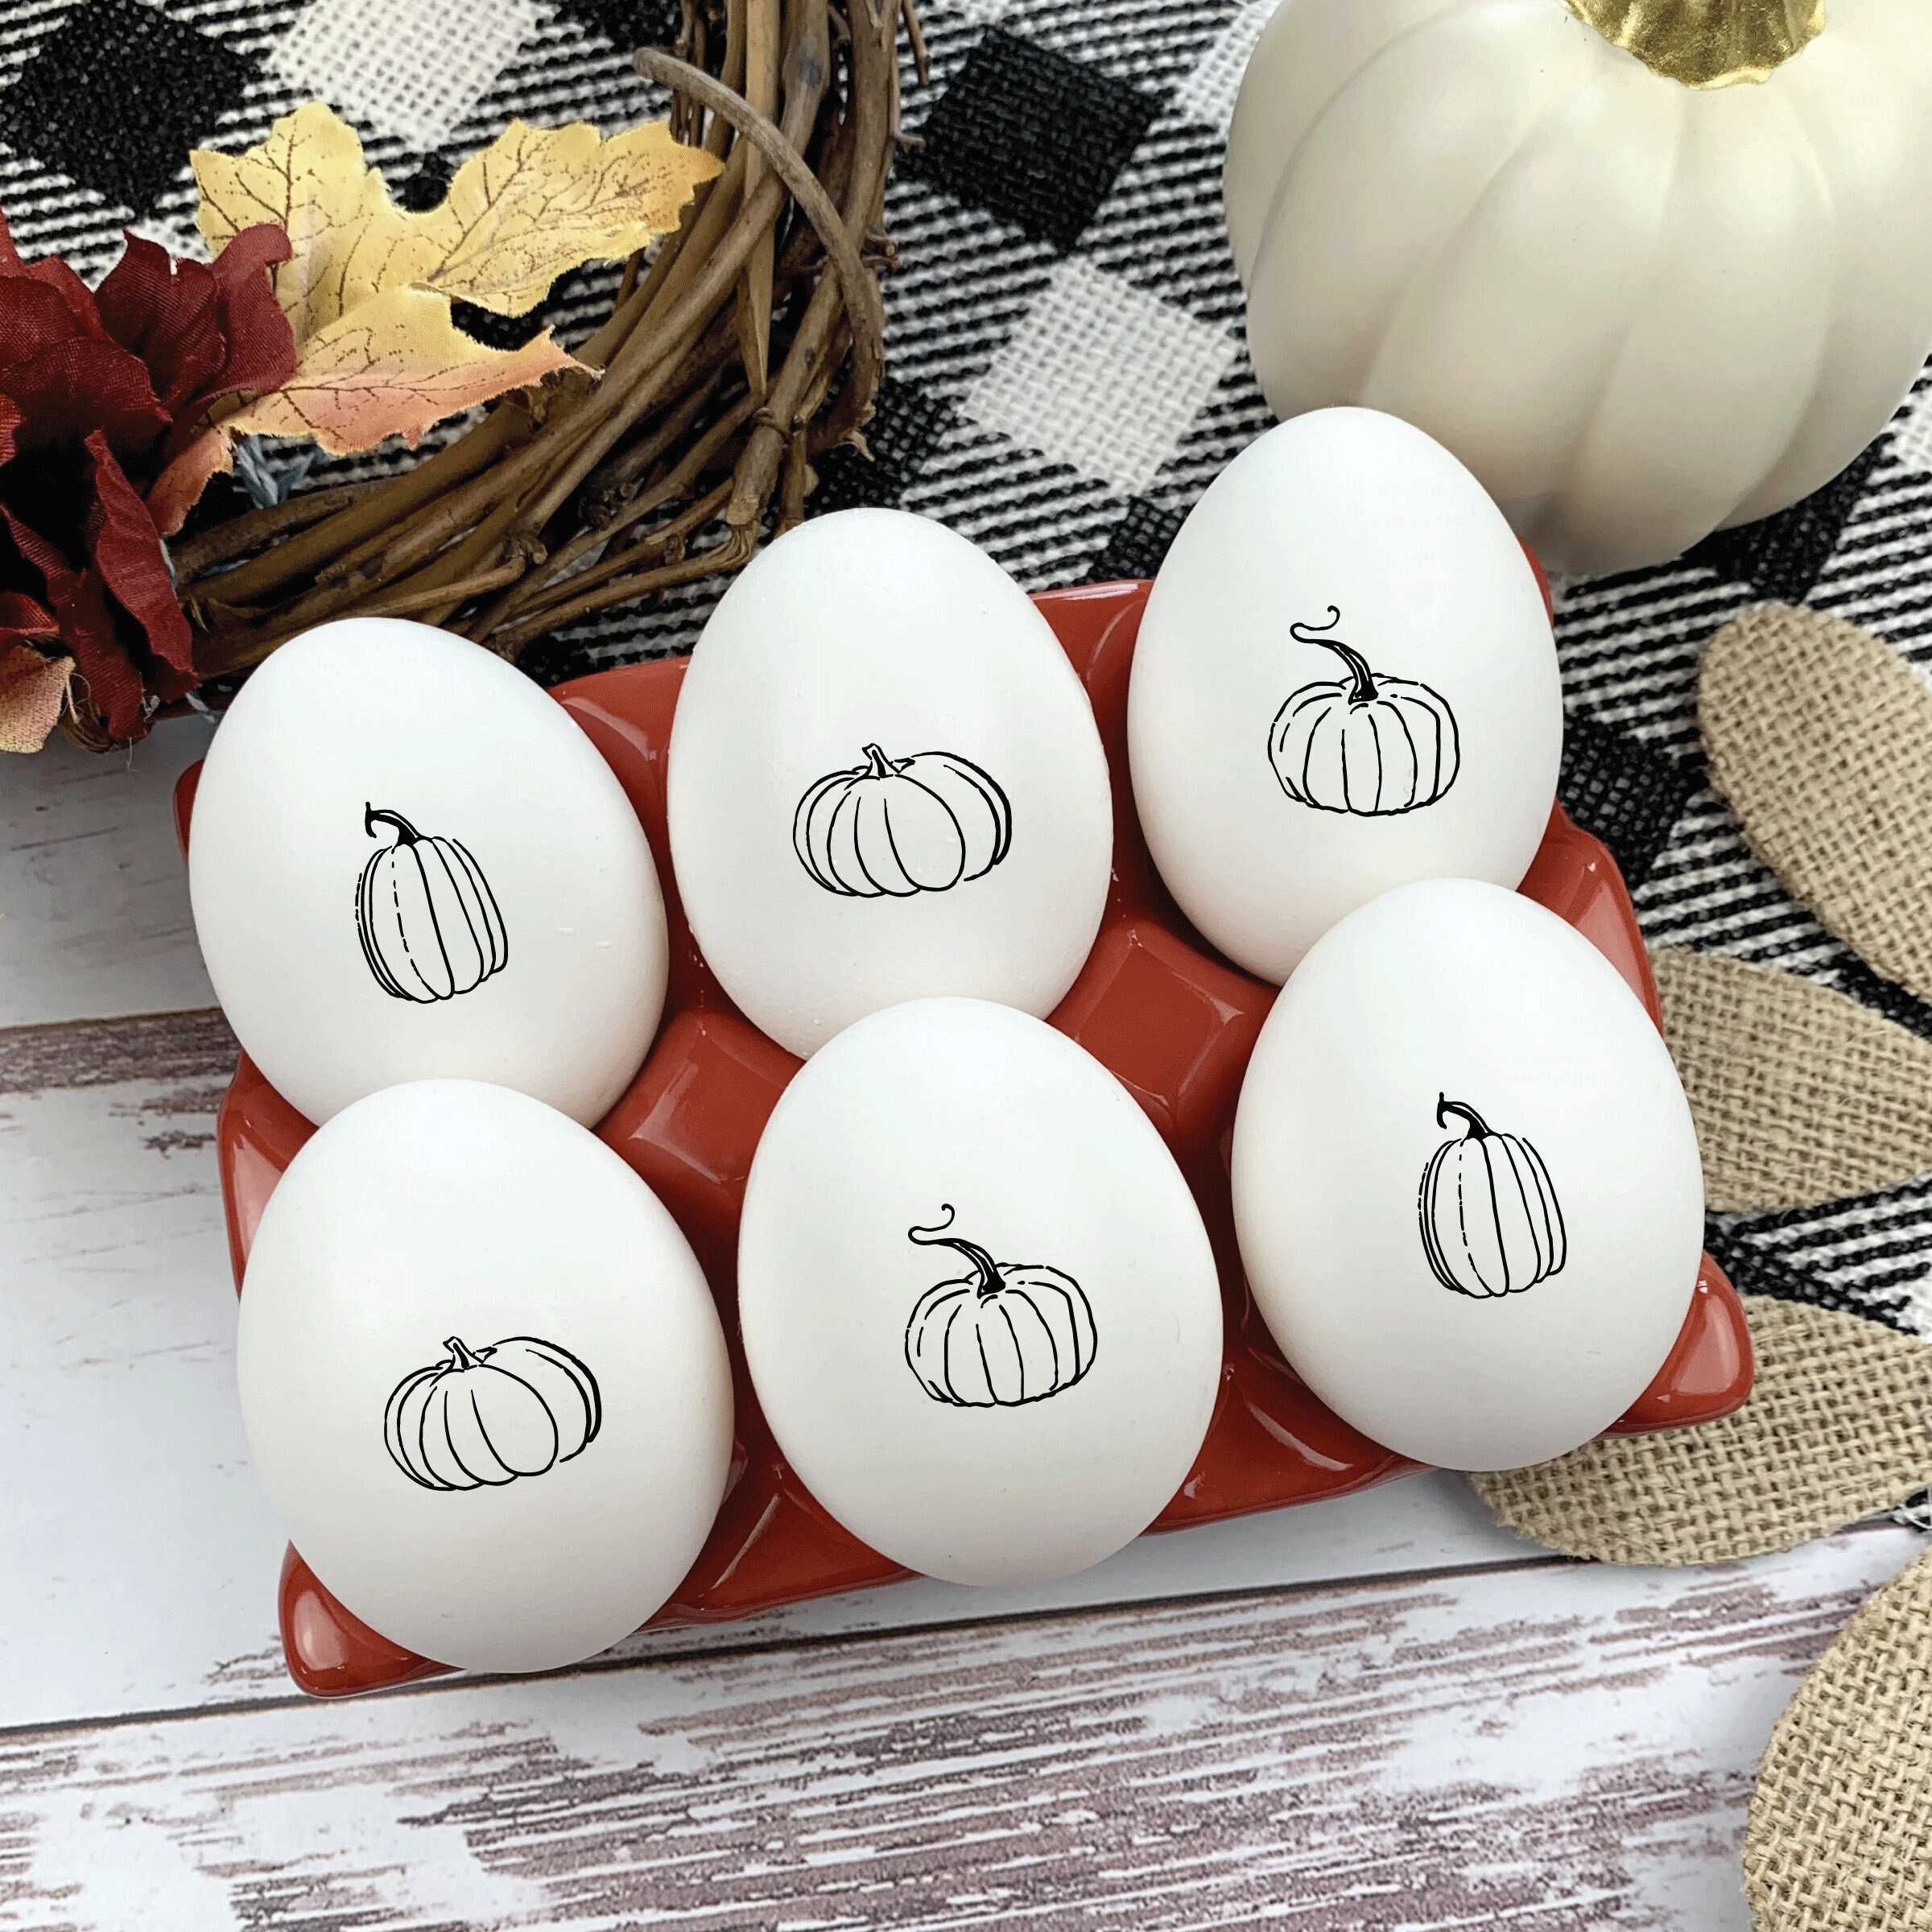 Egg Stamp Set for Eggs, Egg Farmer Coop Gift, Includes Egg Date